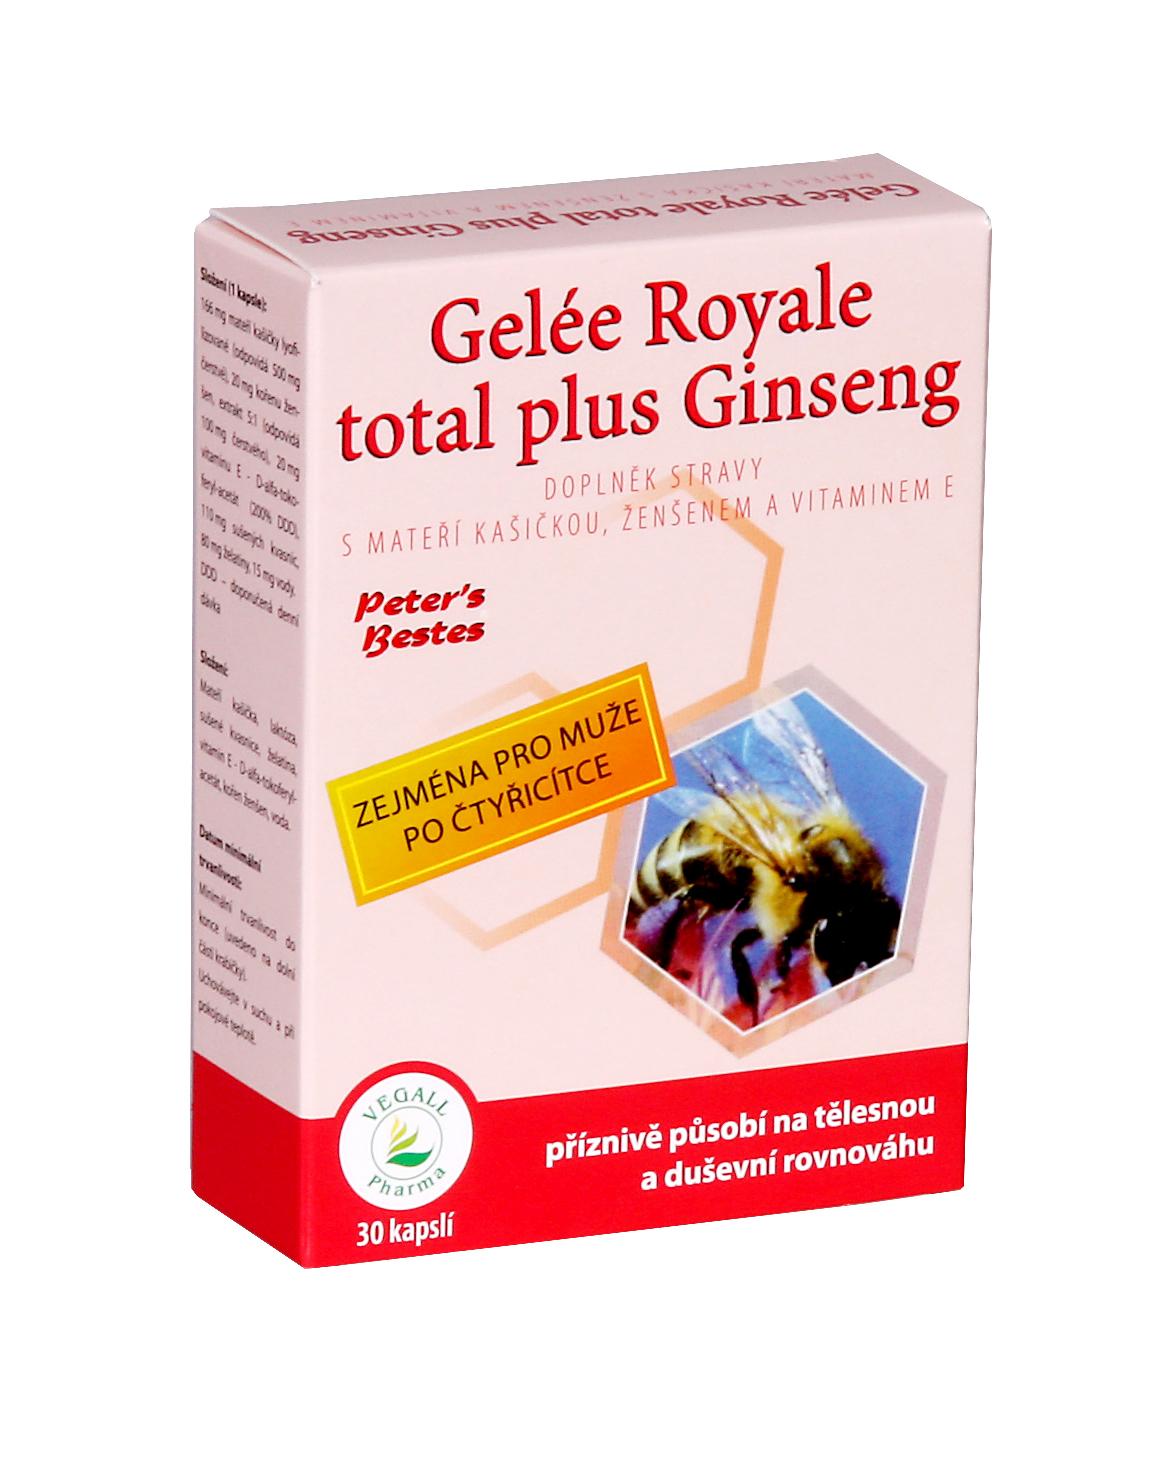 Gelee Royale total plus Ginseng